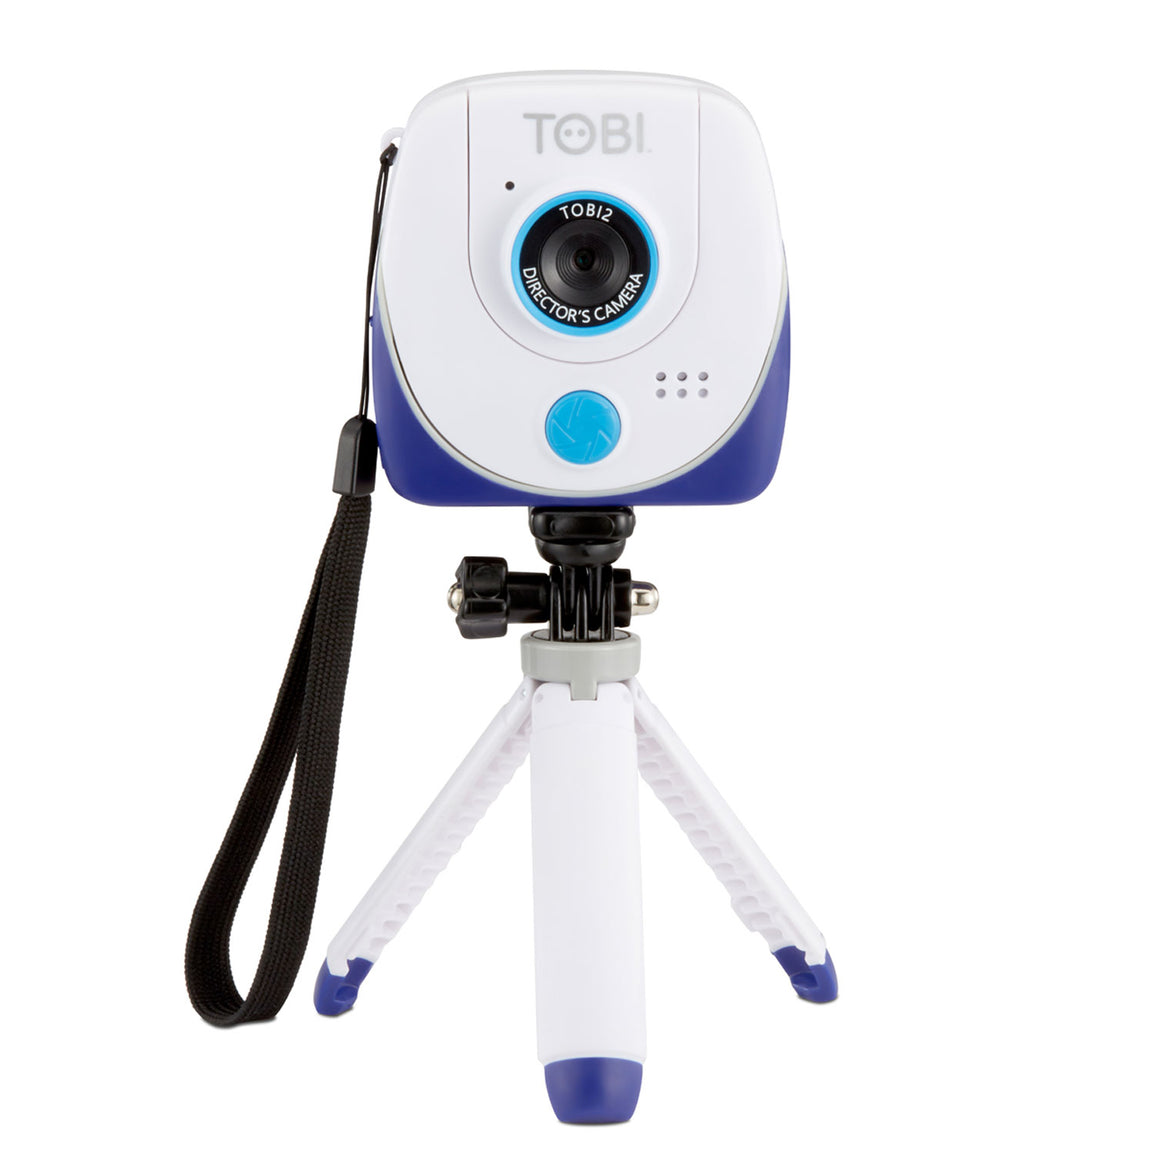 Tobi™ 2 Director's Camera - Official Little Tikes Website